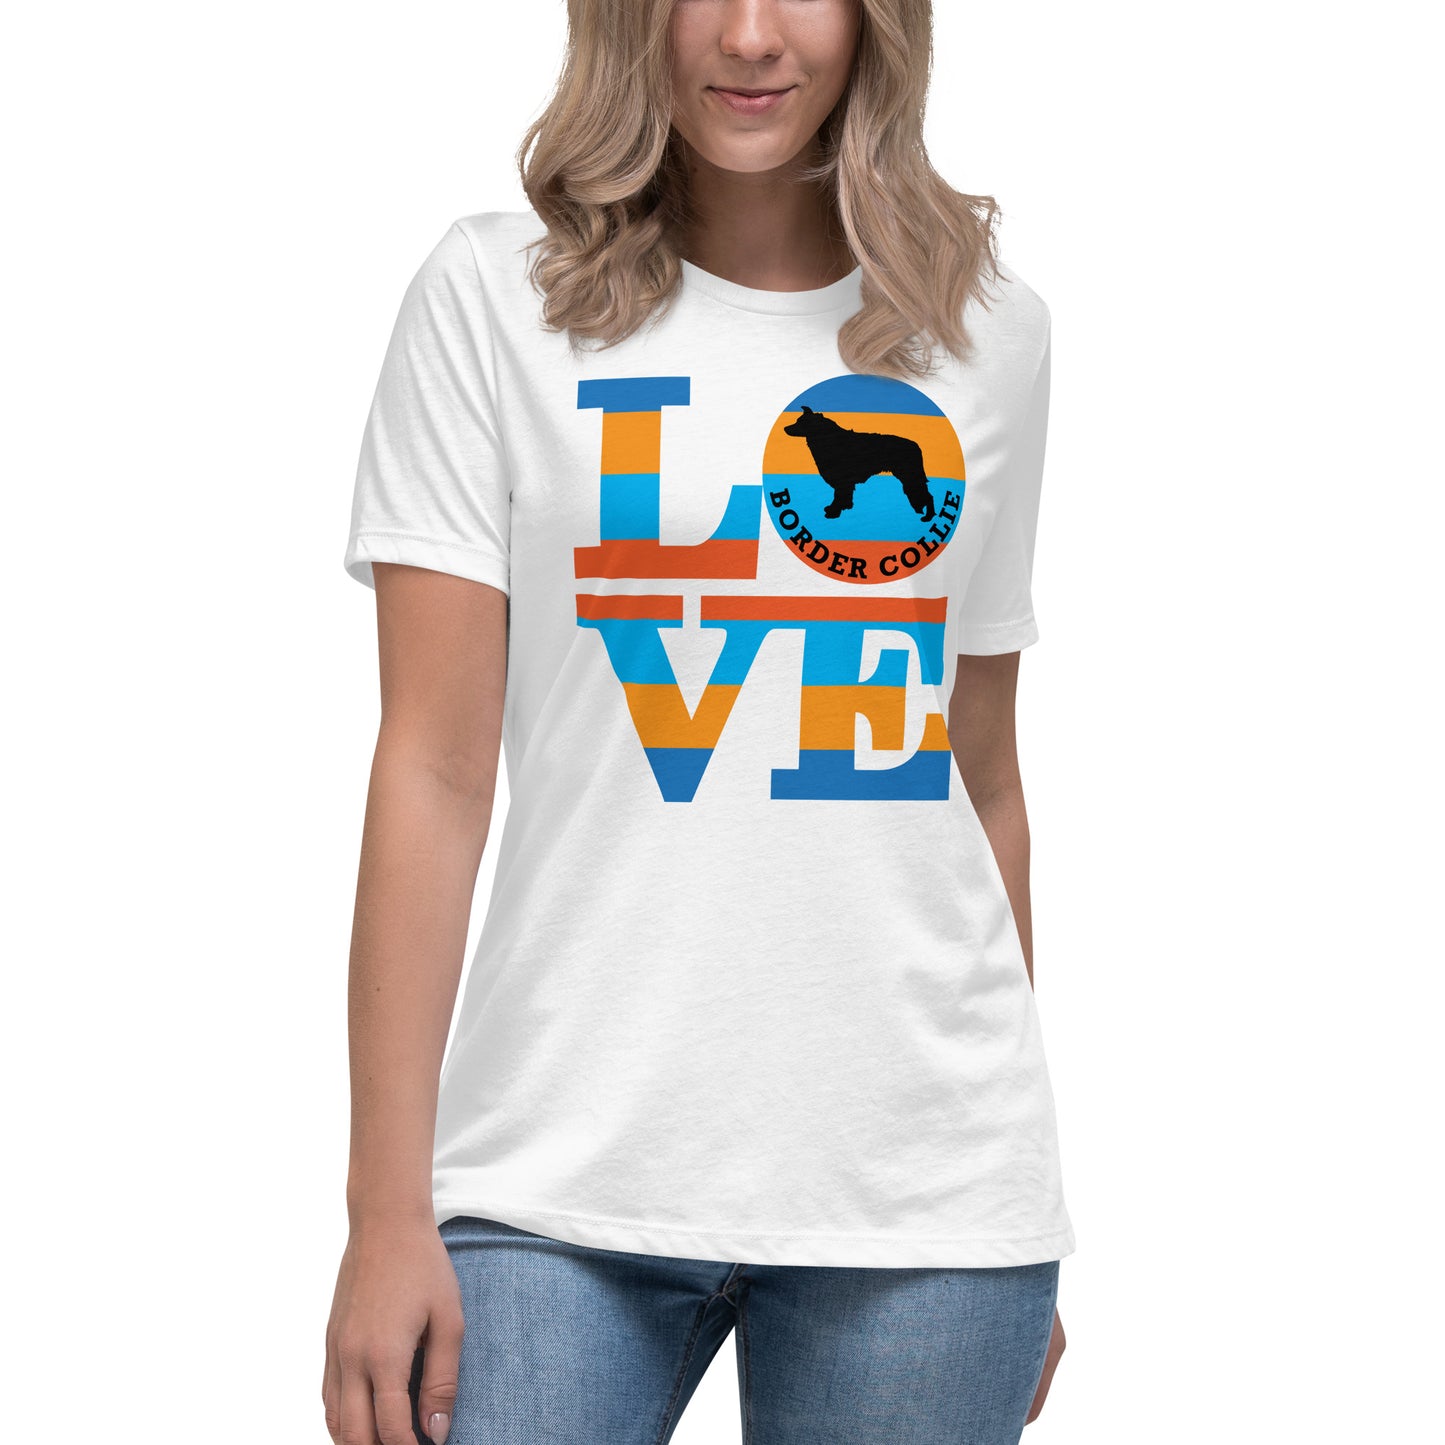 Border Collie Love women’s white t-shirt by Dog Artistry.